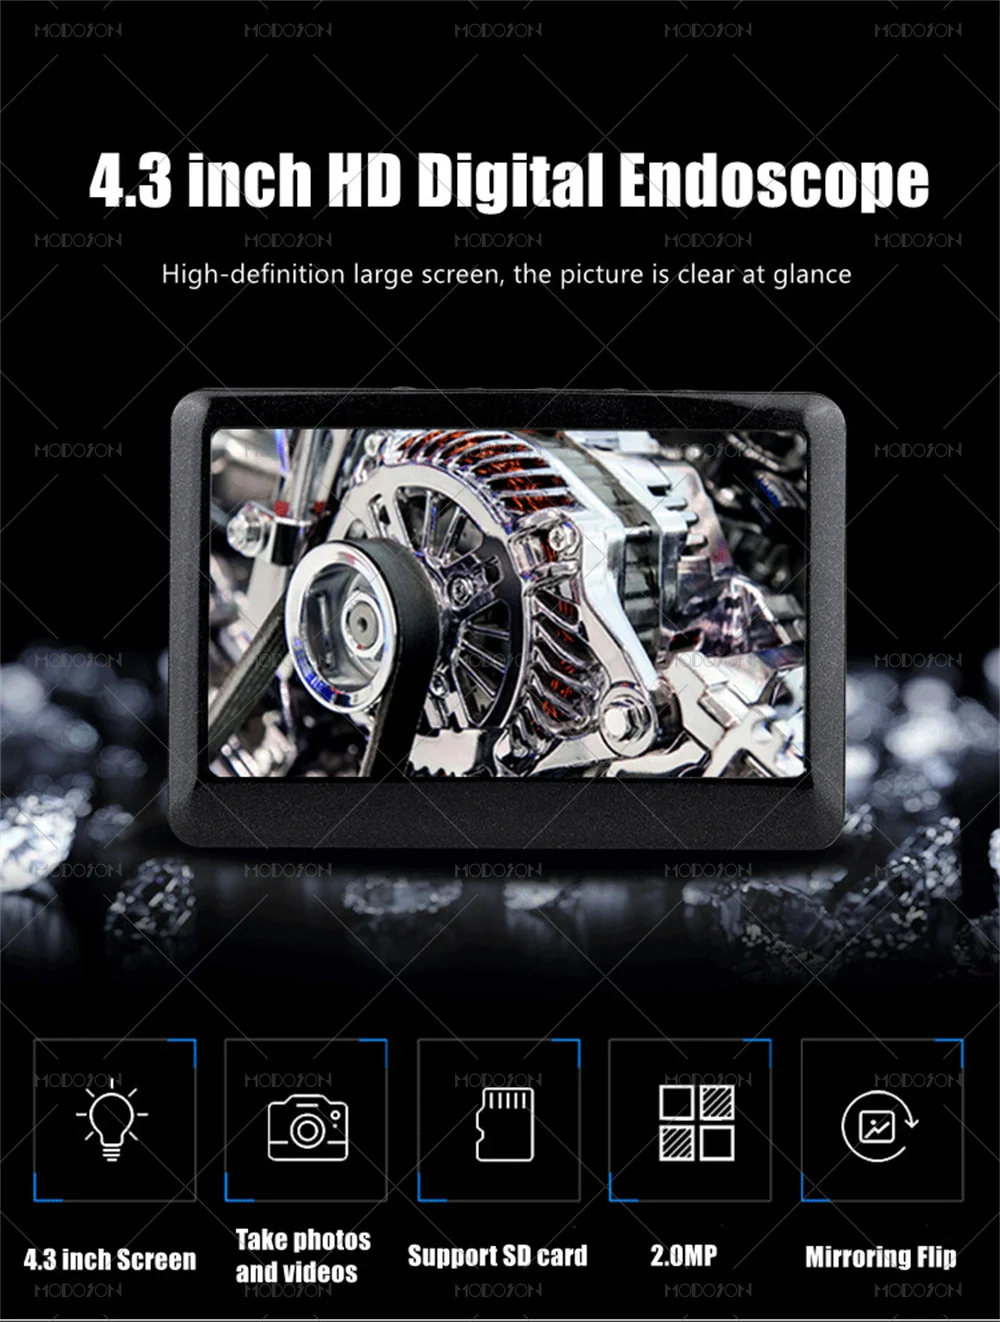 3.9mm 1080P 4.3 inch HD Digital Endoscope Camera 1200mAh Inspection Videoscope Snake Cable Video Borescope Handheld Endoscopy non wifi security cameras